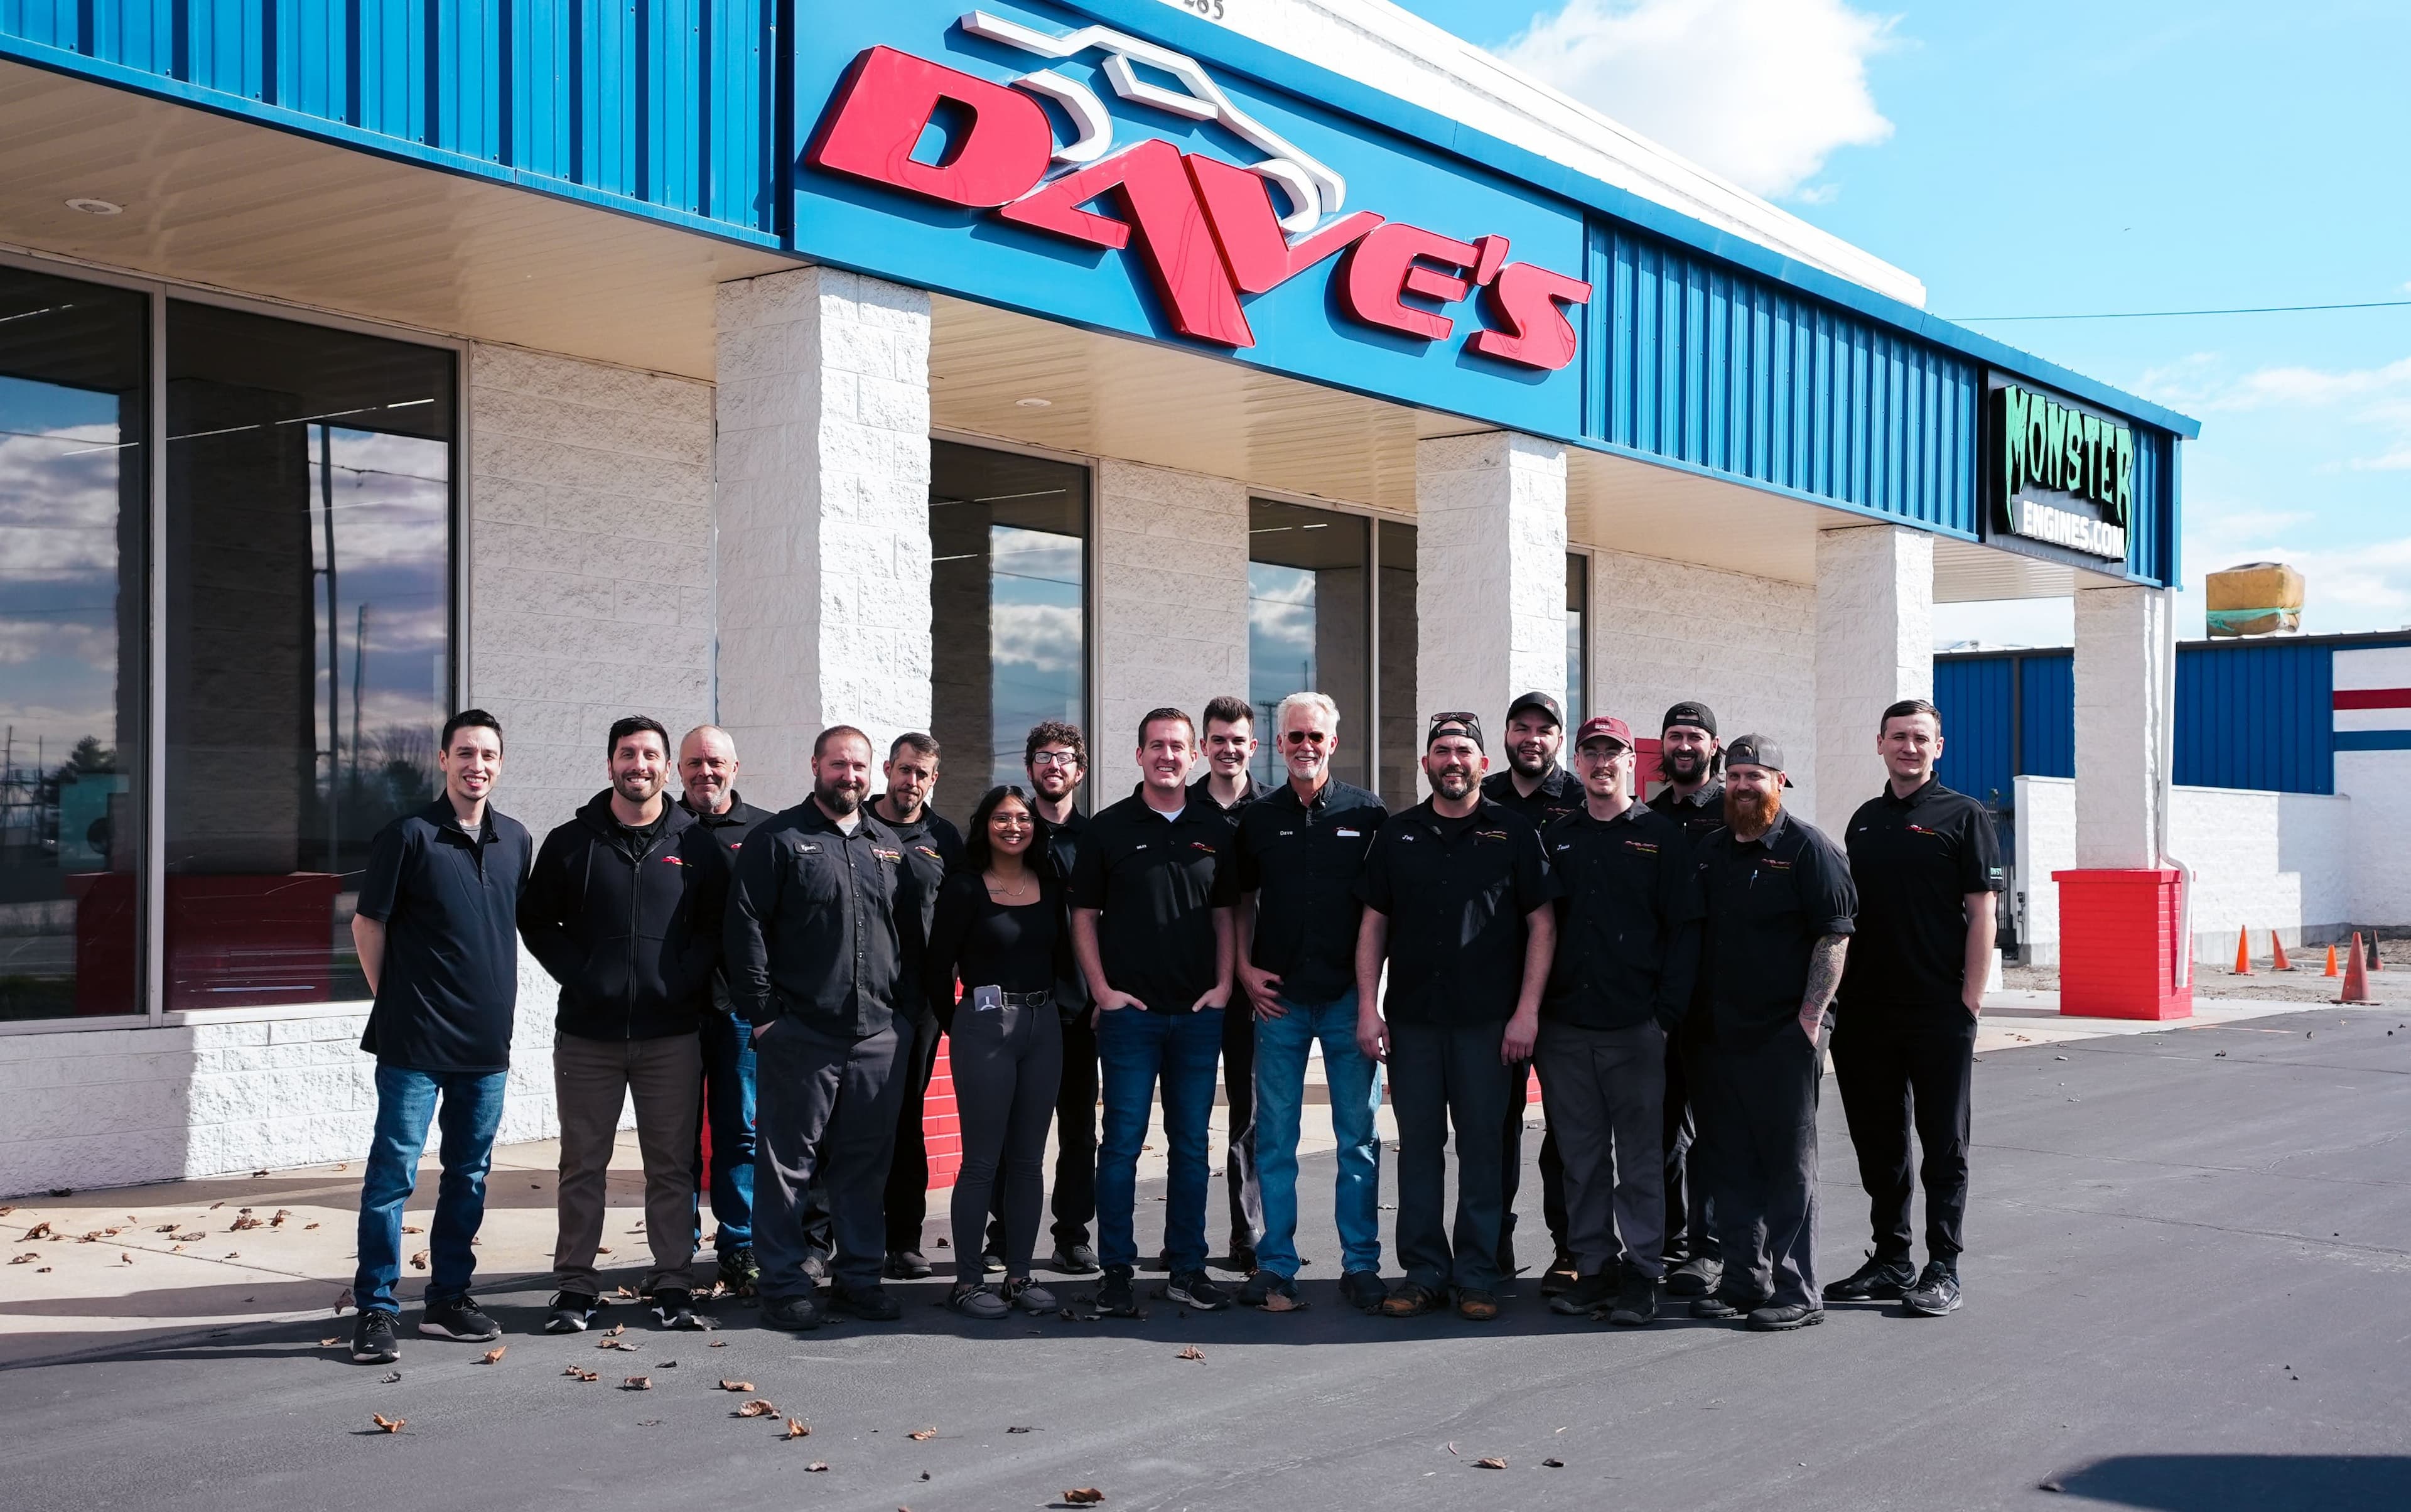 Dave's auto center team